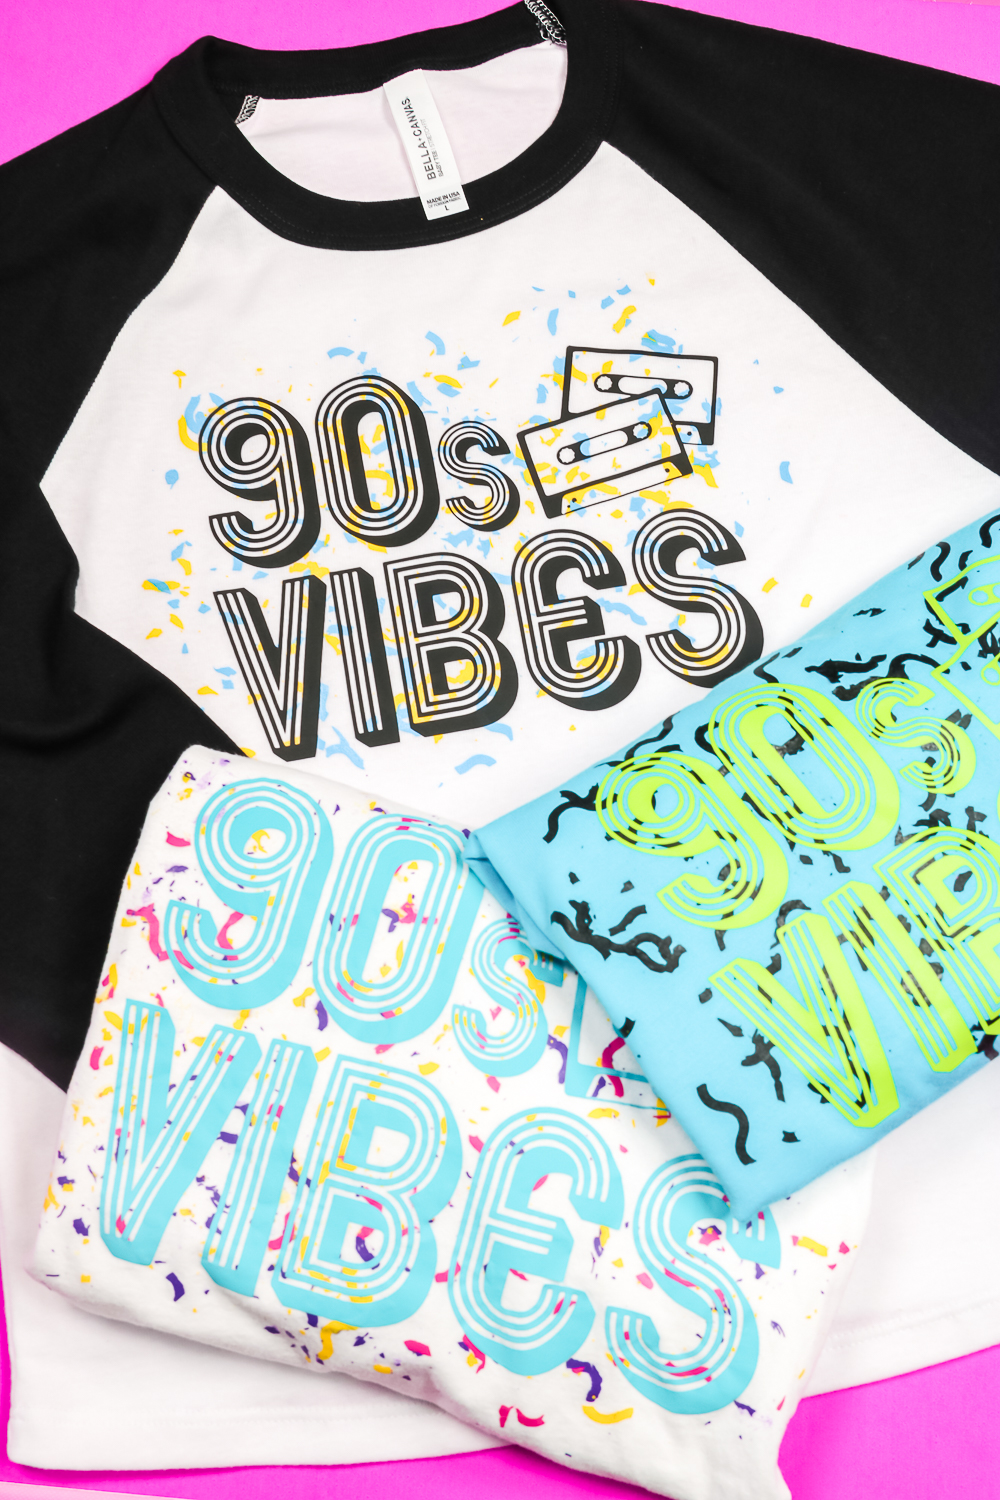 90's vibes screen print confetti t-shirts.